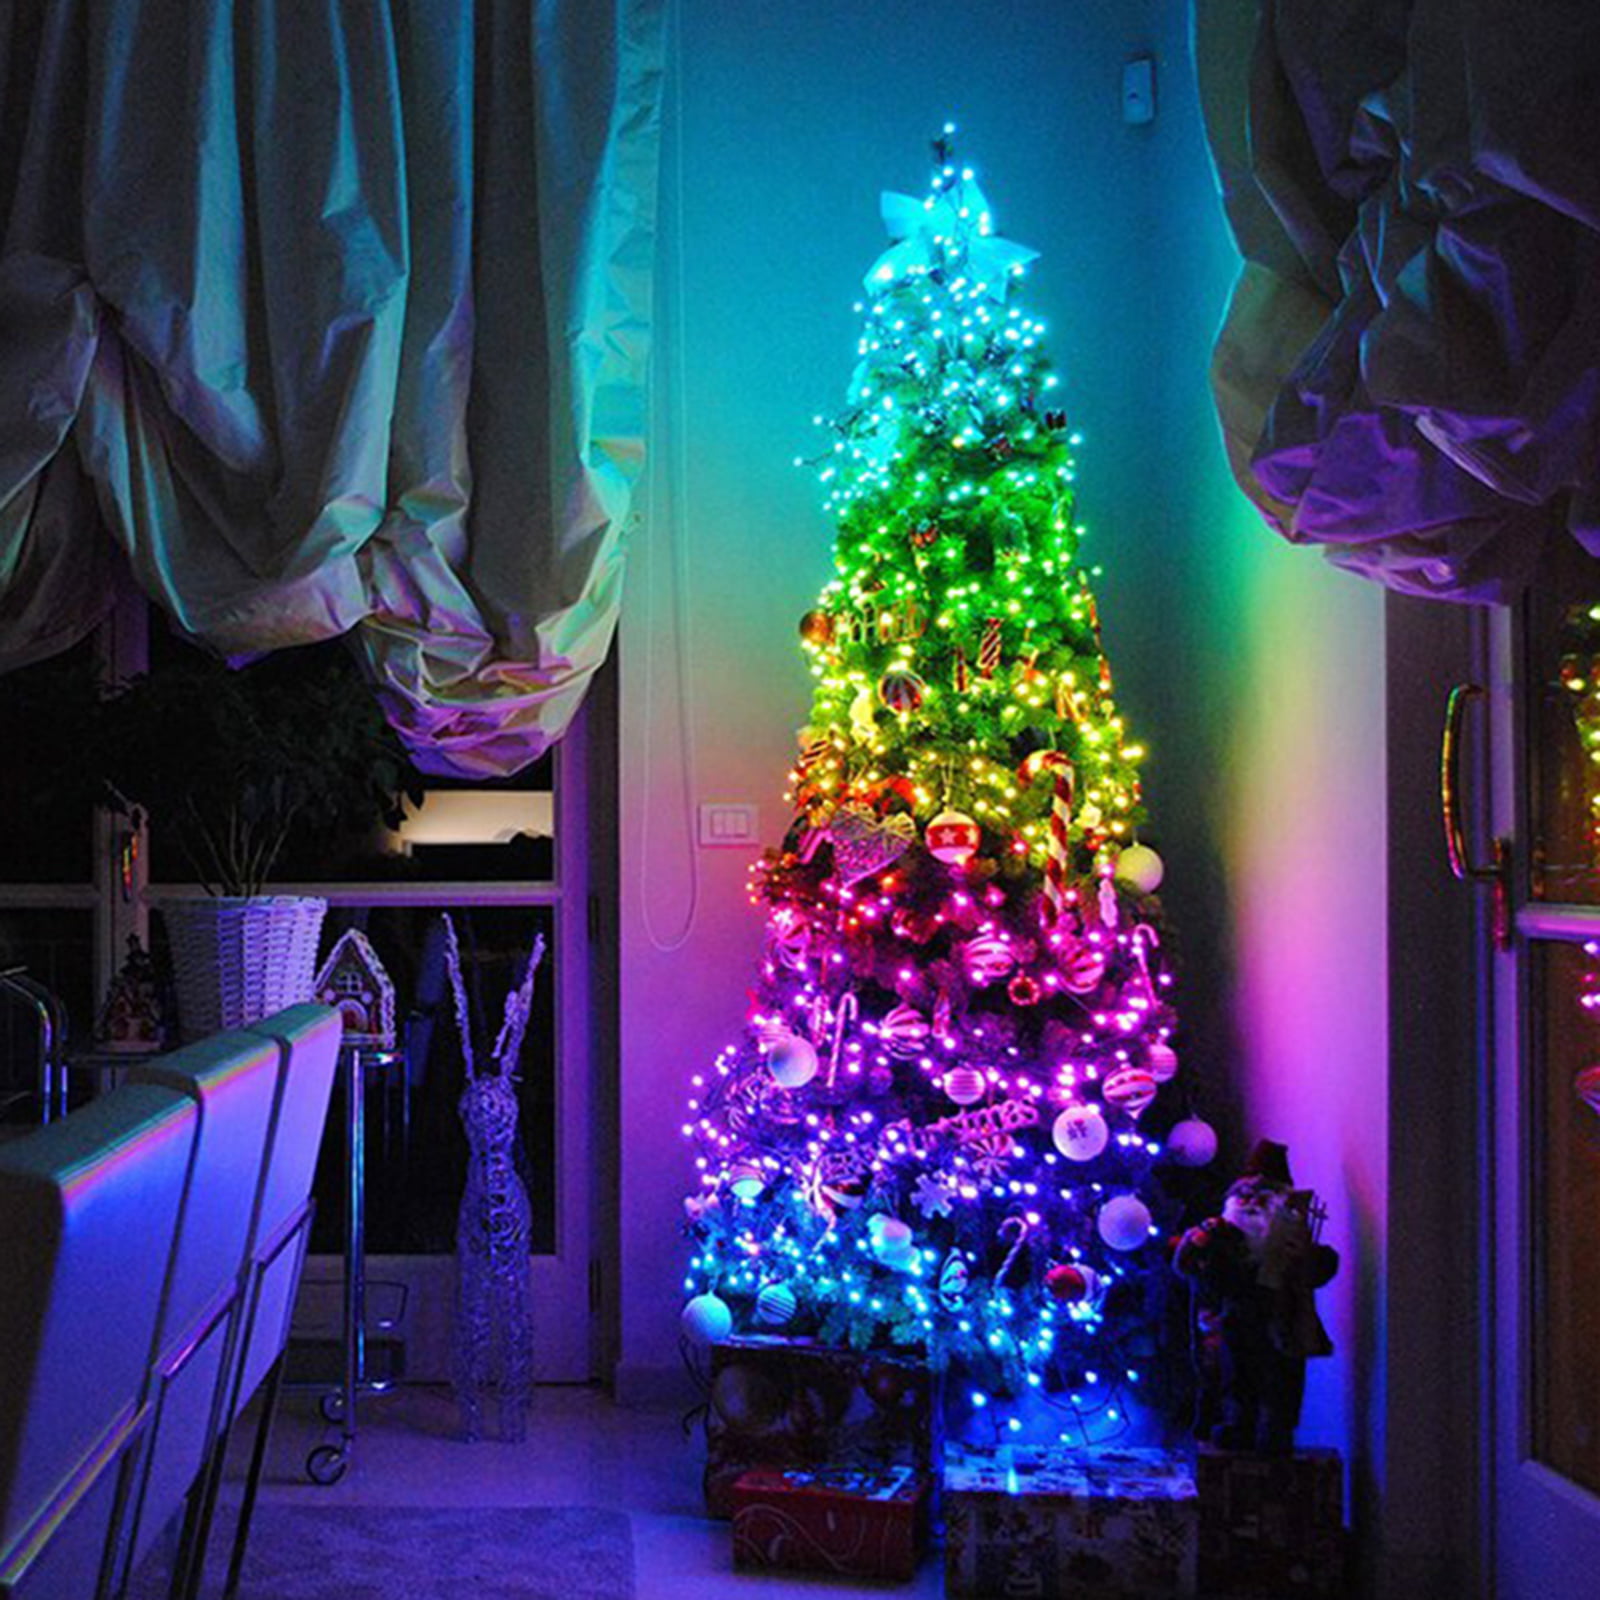 Details about   Christmas tree decoration lights LED string lights App remote control lights 